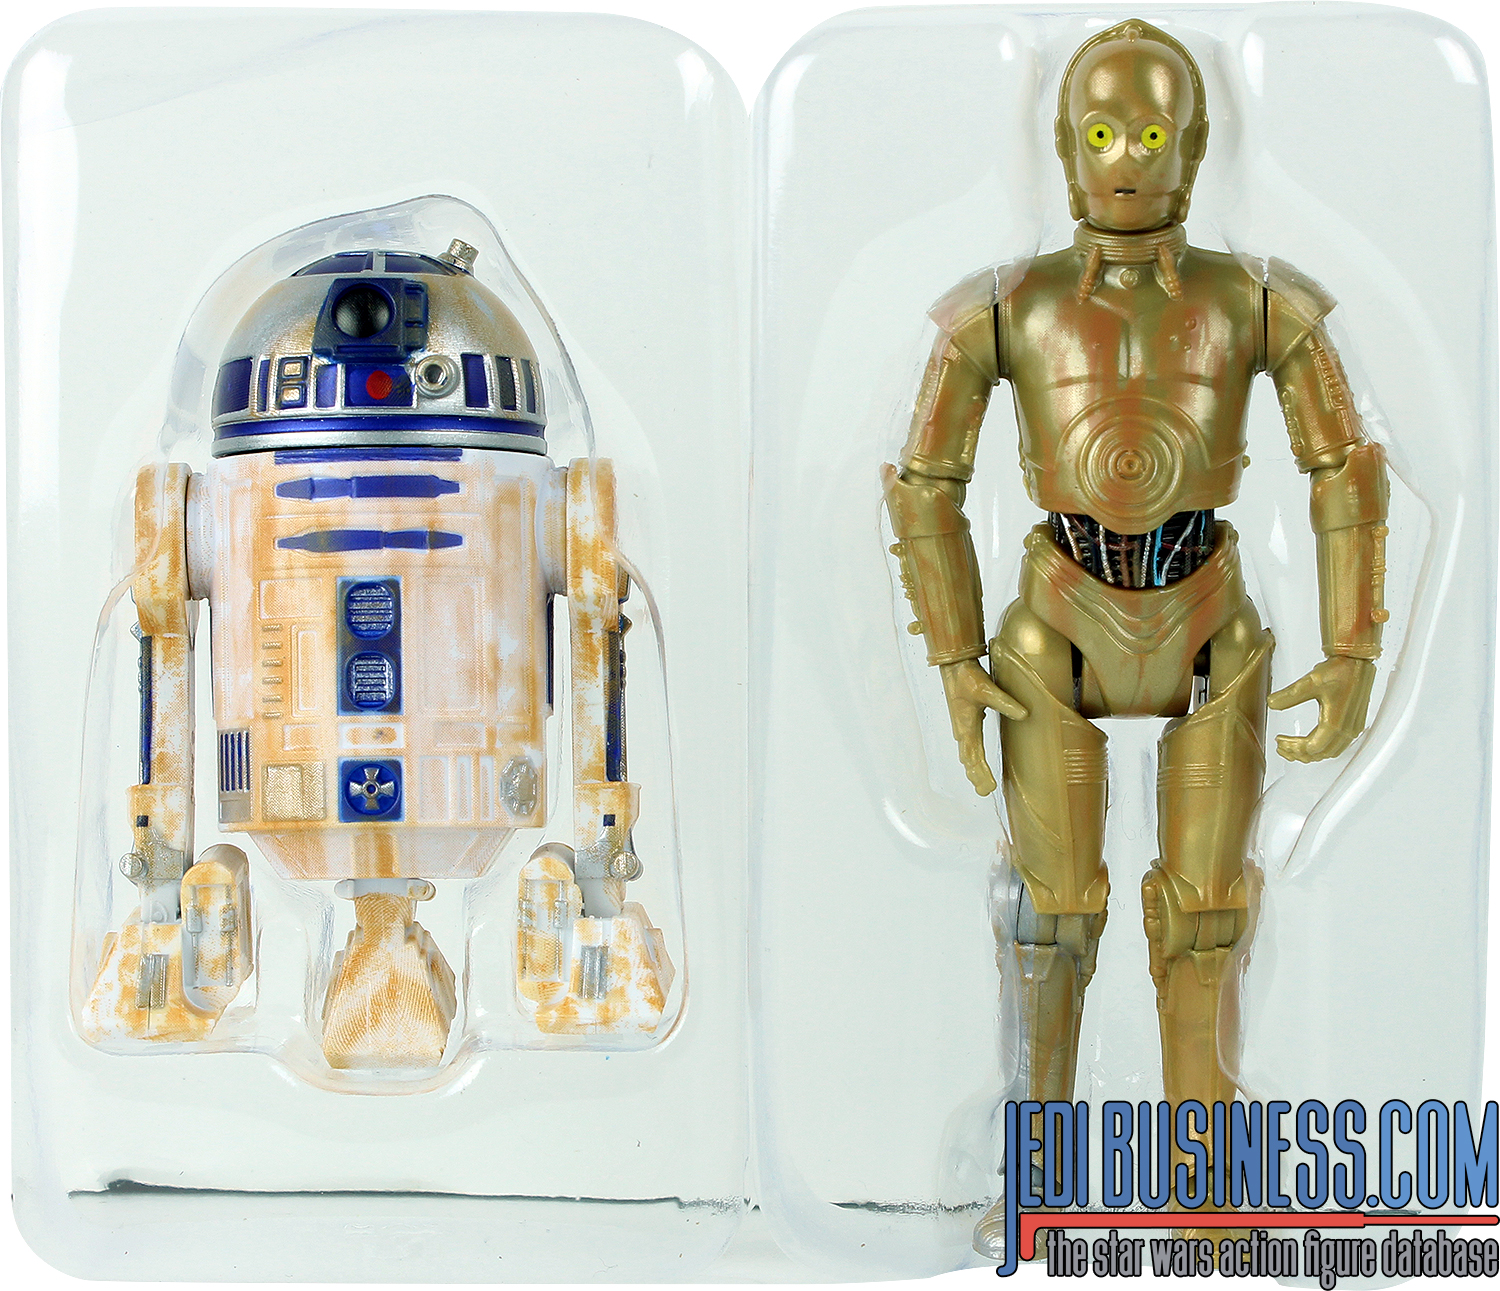 R2-D2 40th Anniversary 2-Pack